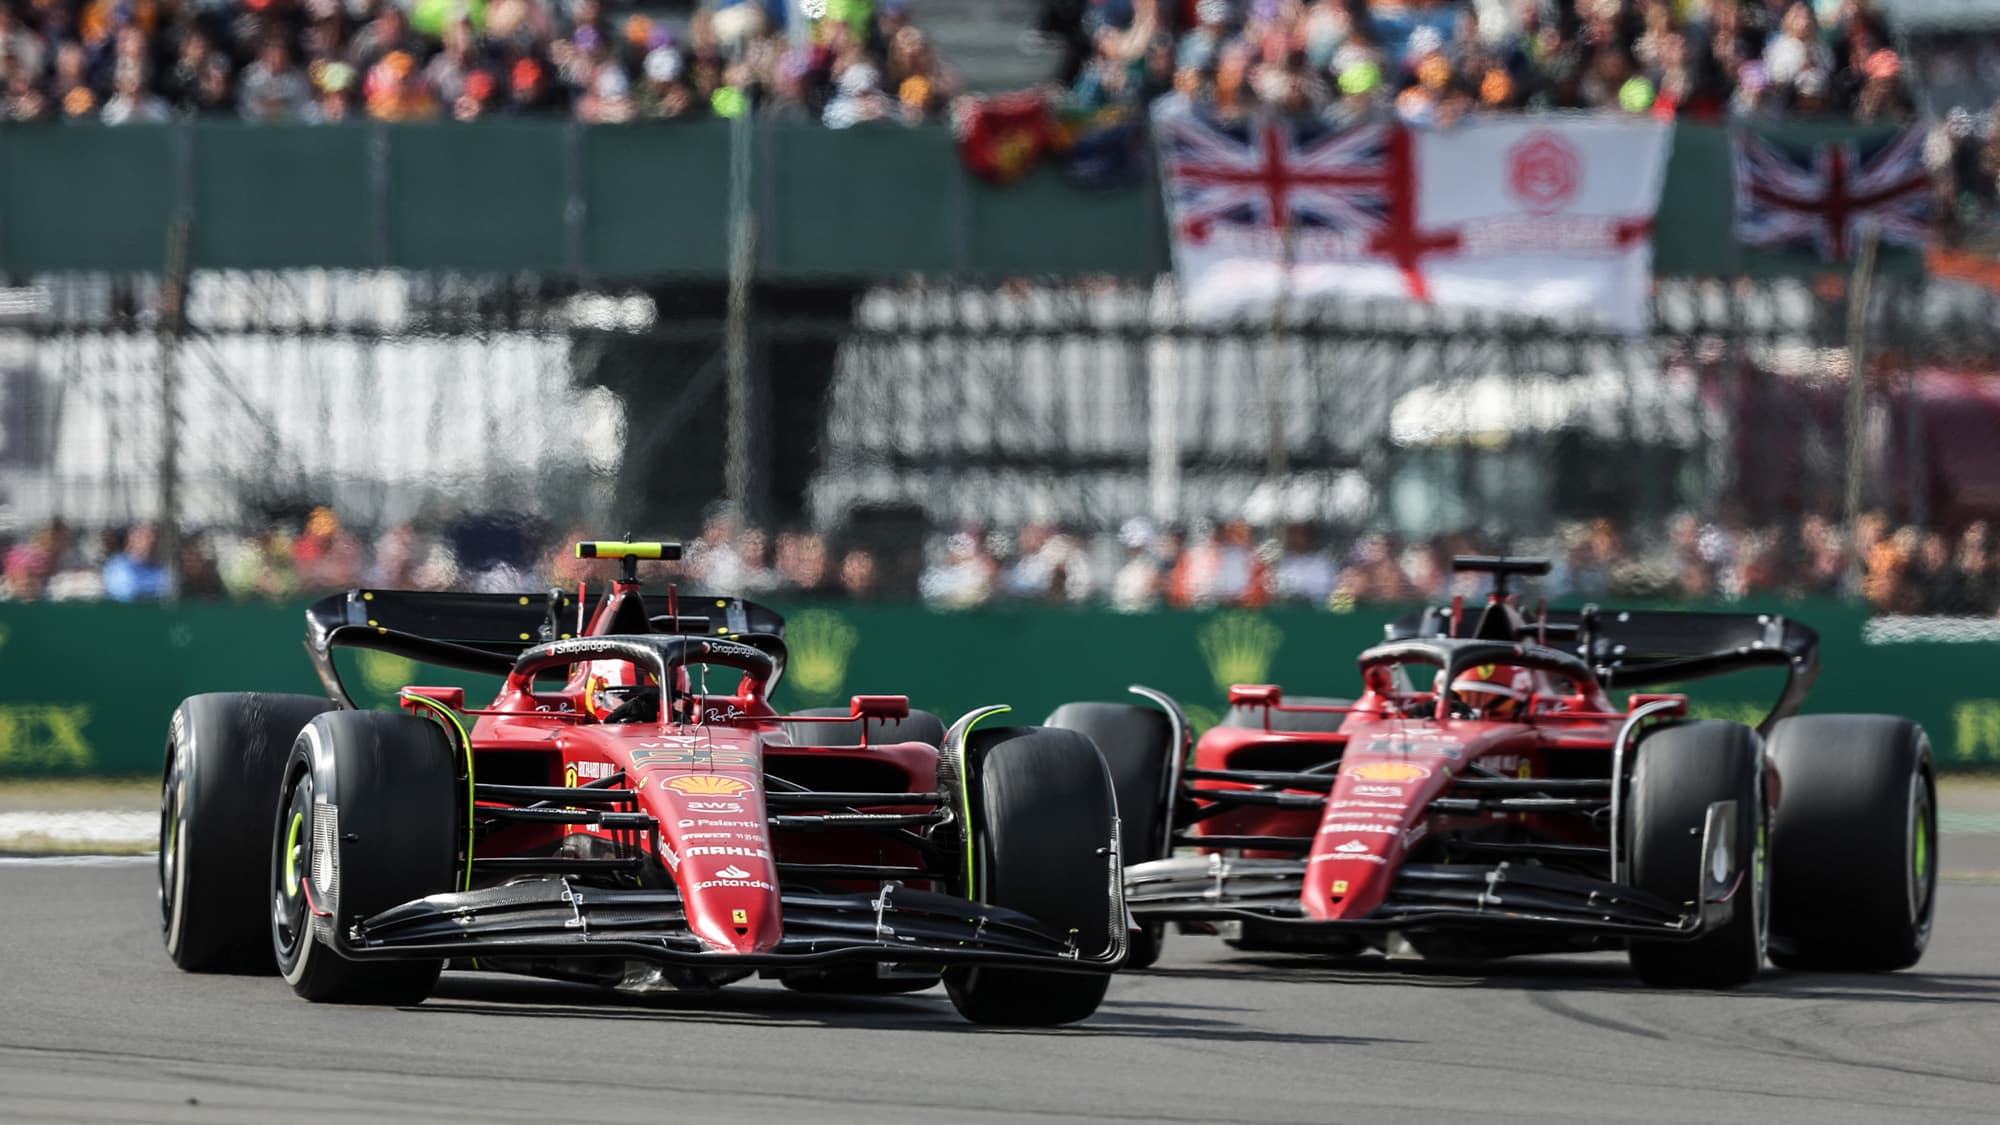 Carlos Sainz ahead of Charles Leclerc in the 2022 British GP